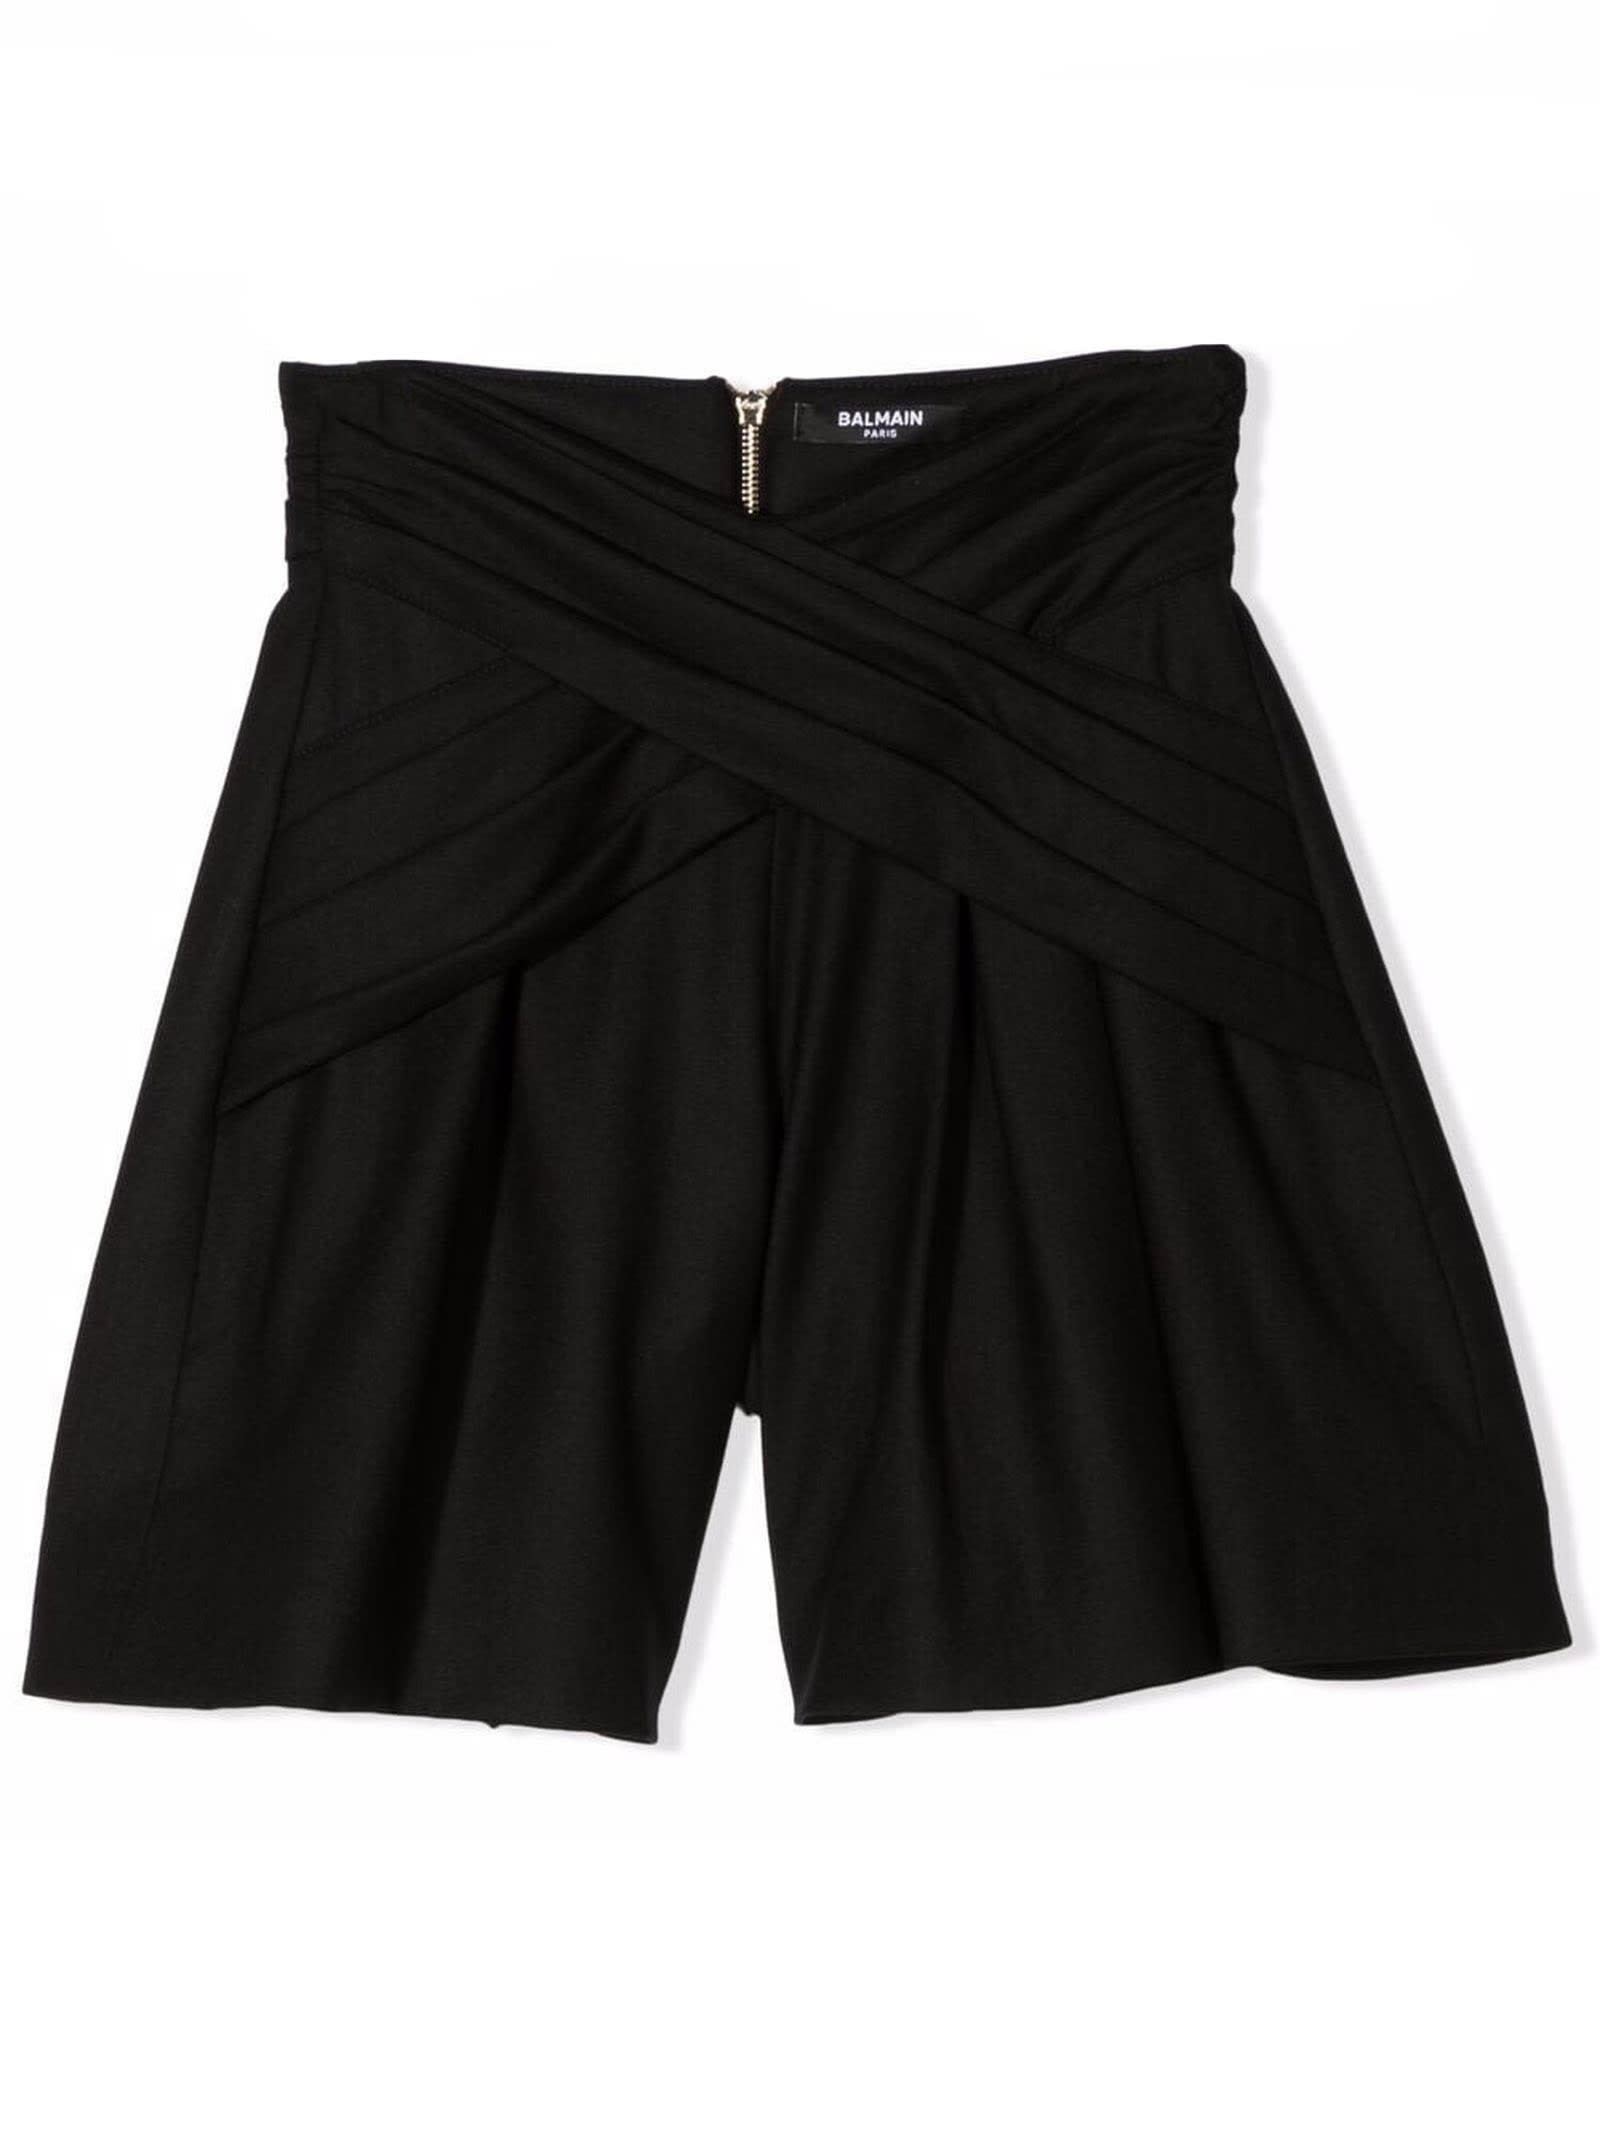 Balmain Black Virgin Wool-blend Shorts